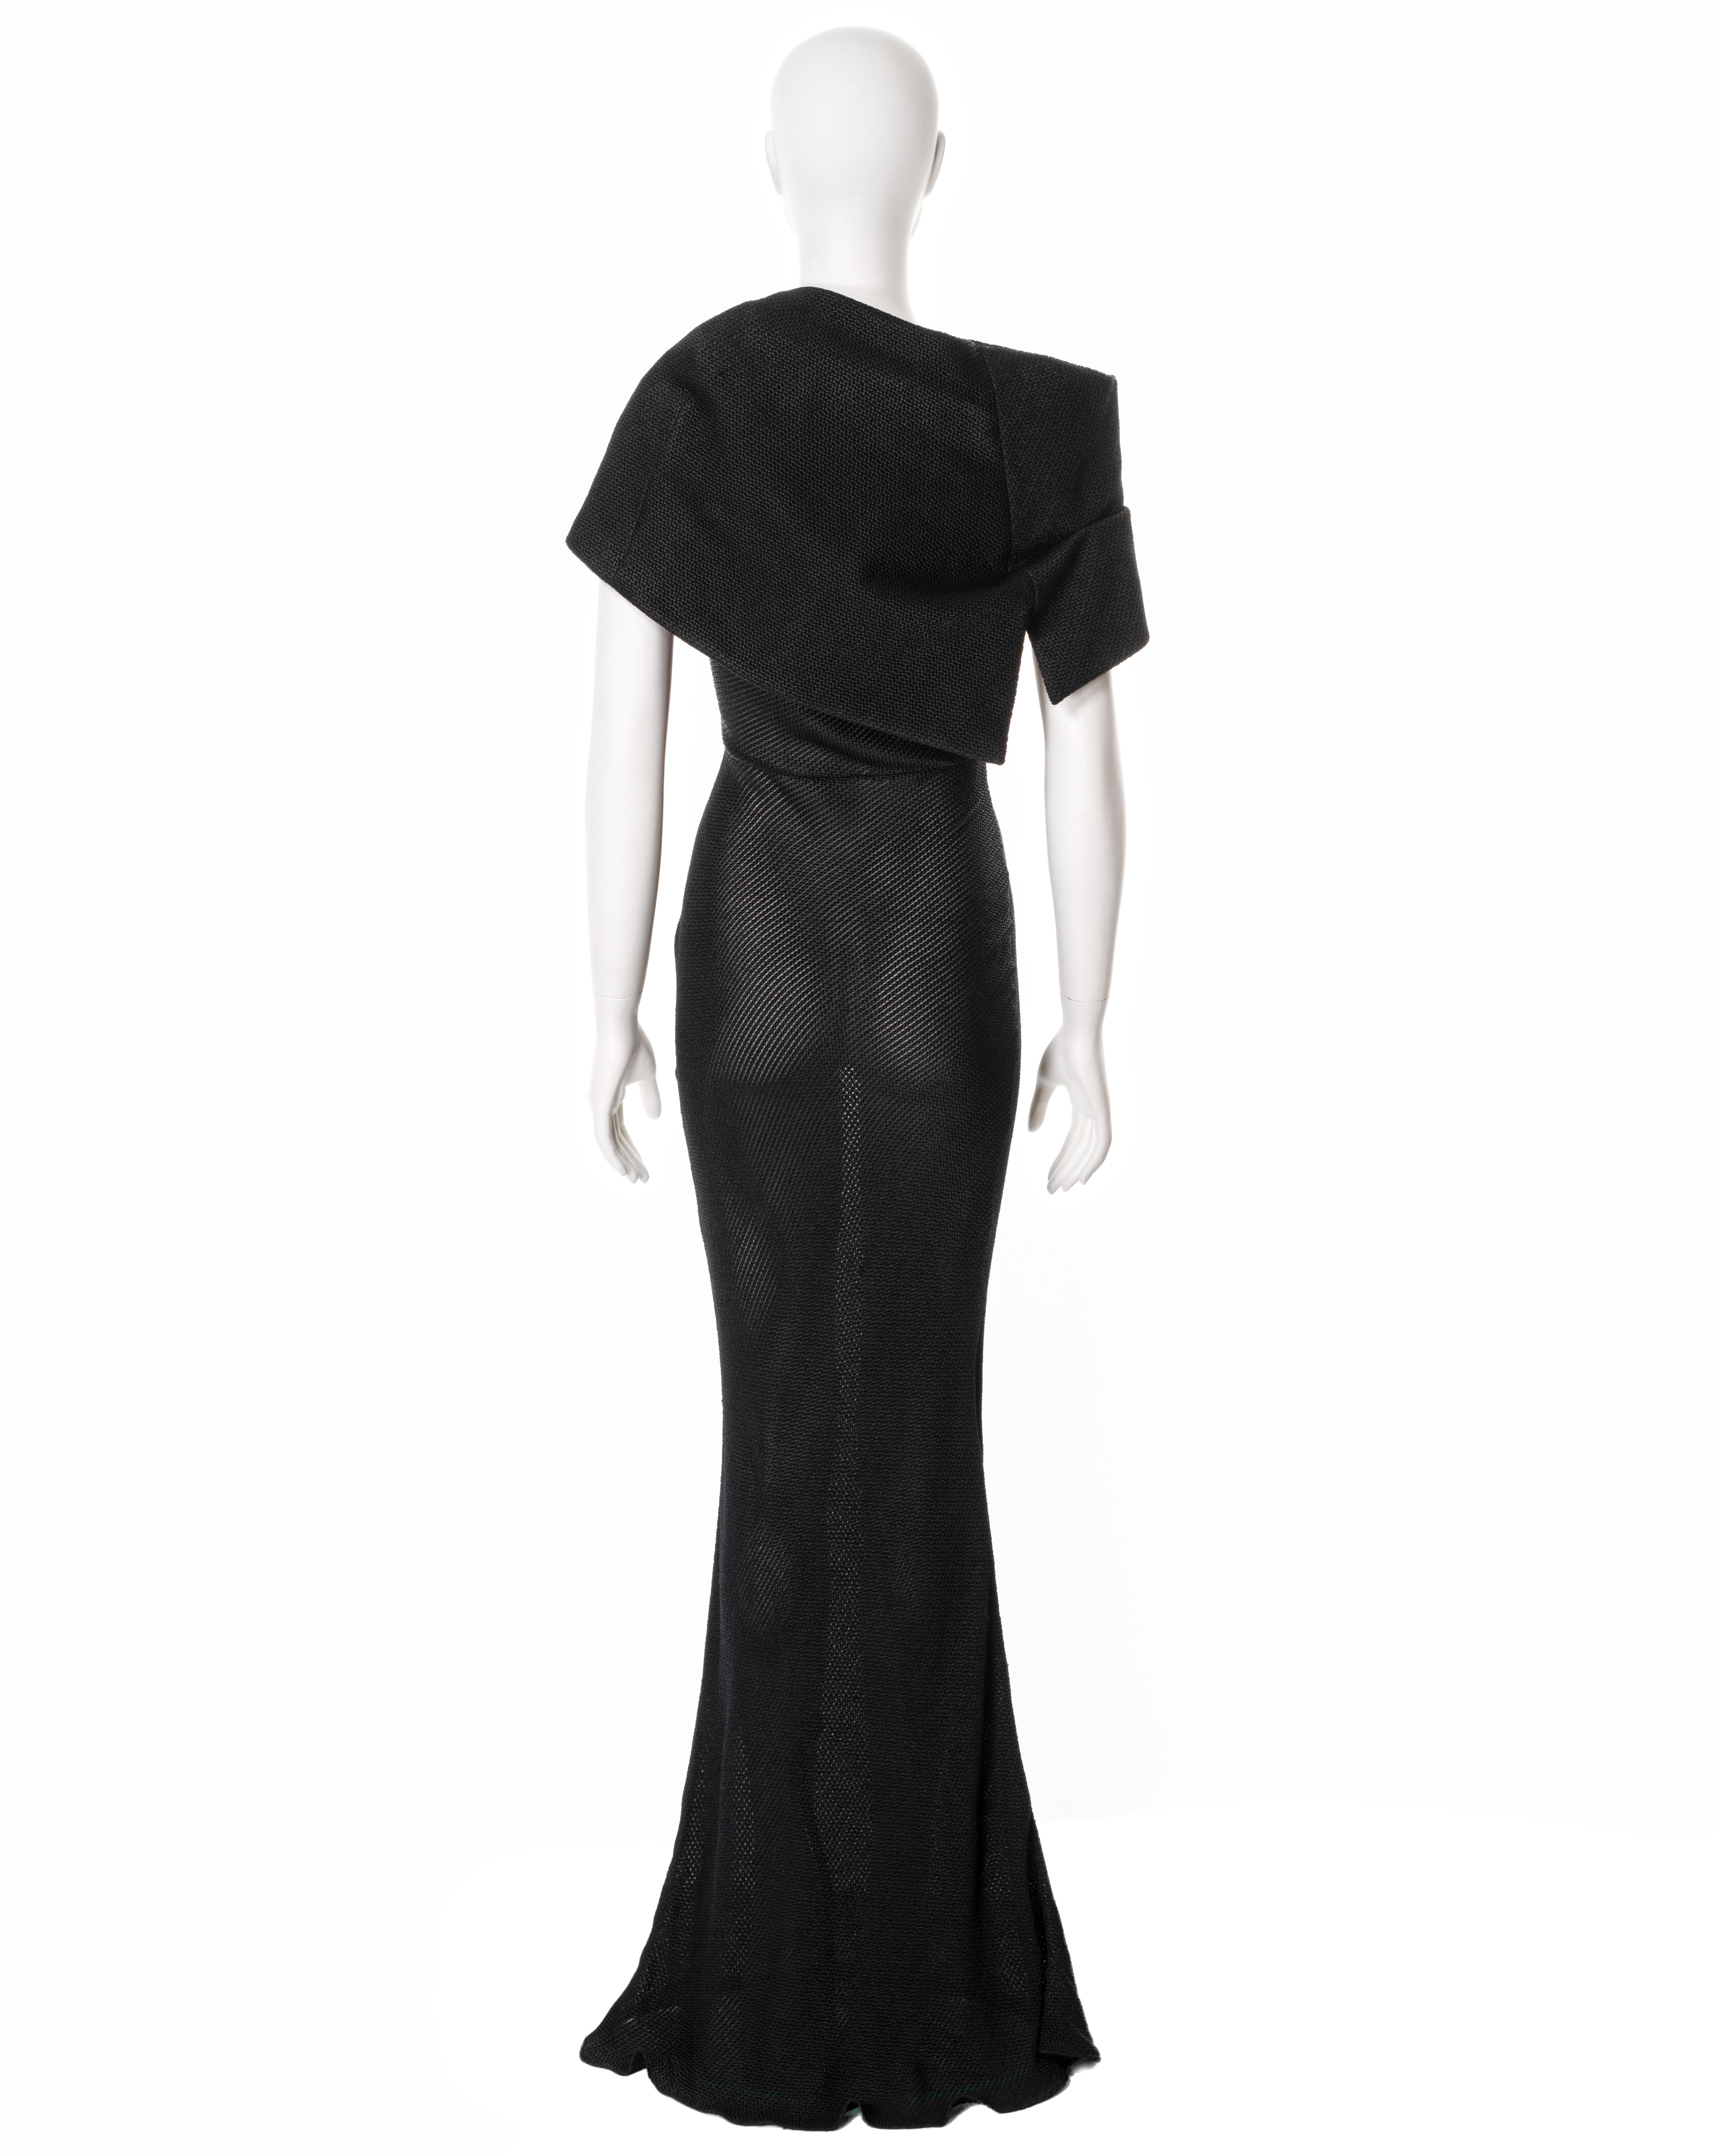 John Galliano black bias-cut viscose evening dress with large collar, fw 1999 For Sale 3